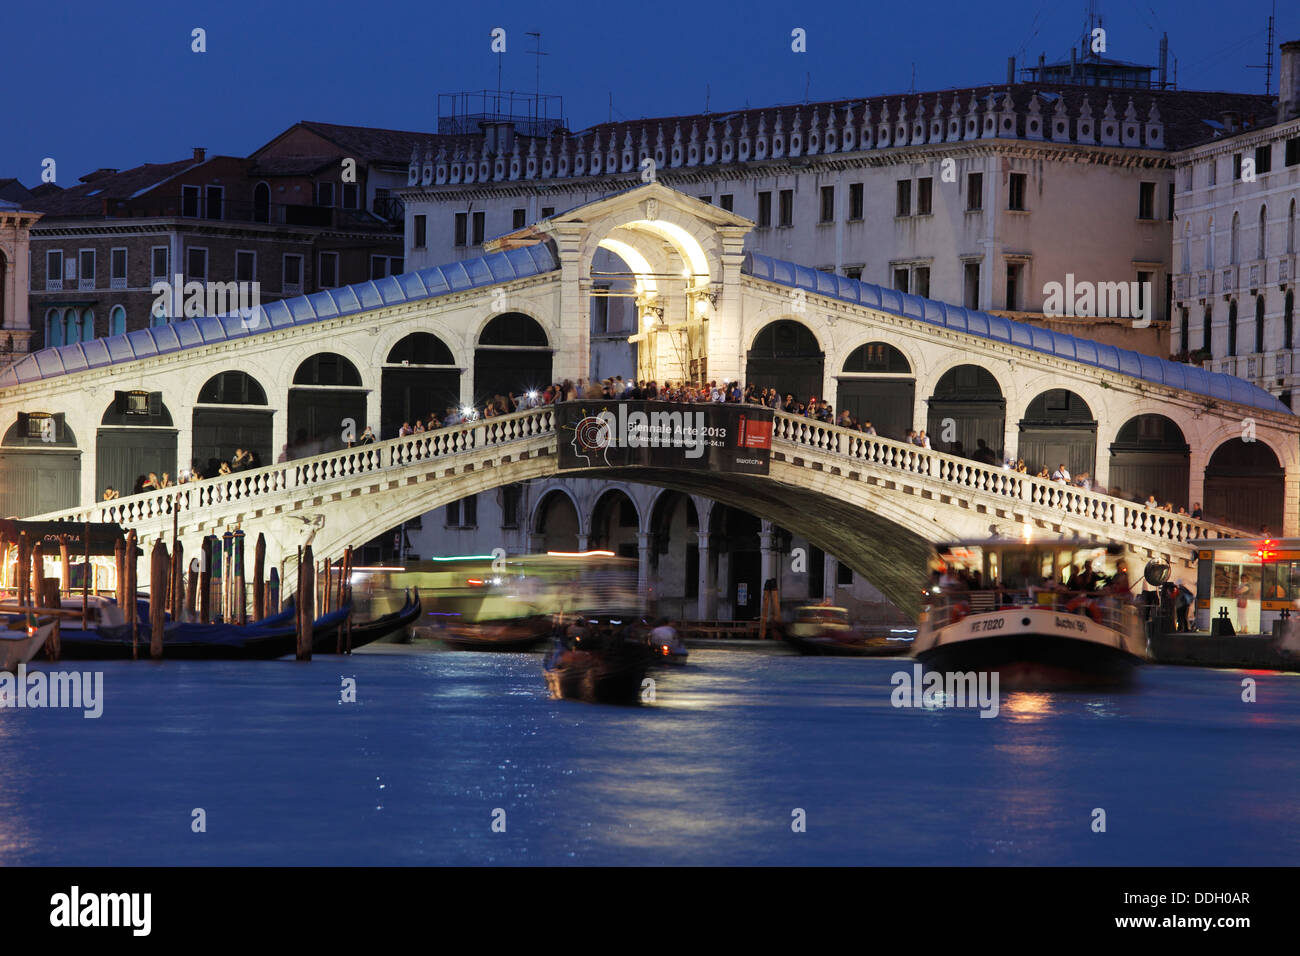 Rialto-Brücke in der Nacht, Canal Grande, Venedig, Italien;  Ponte di Rialto Stockfoto